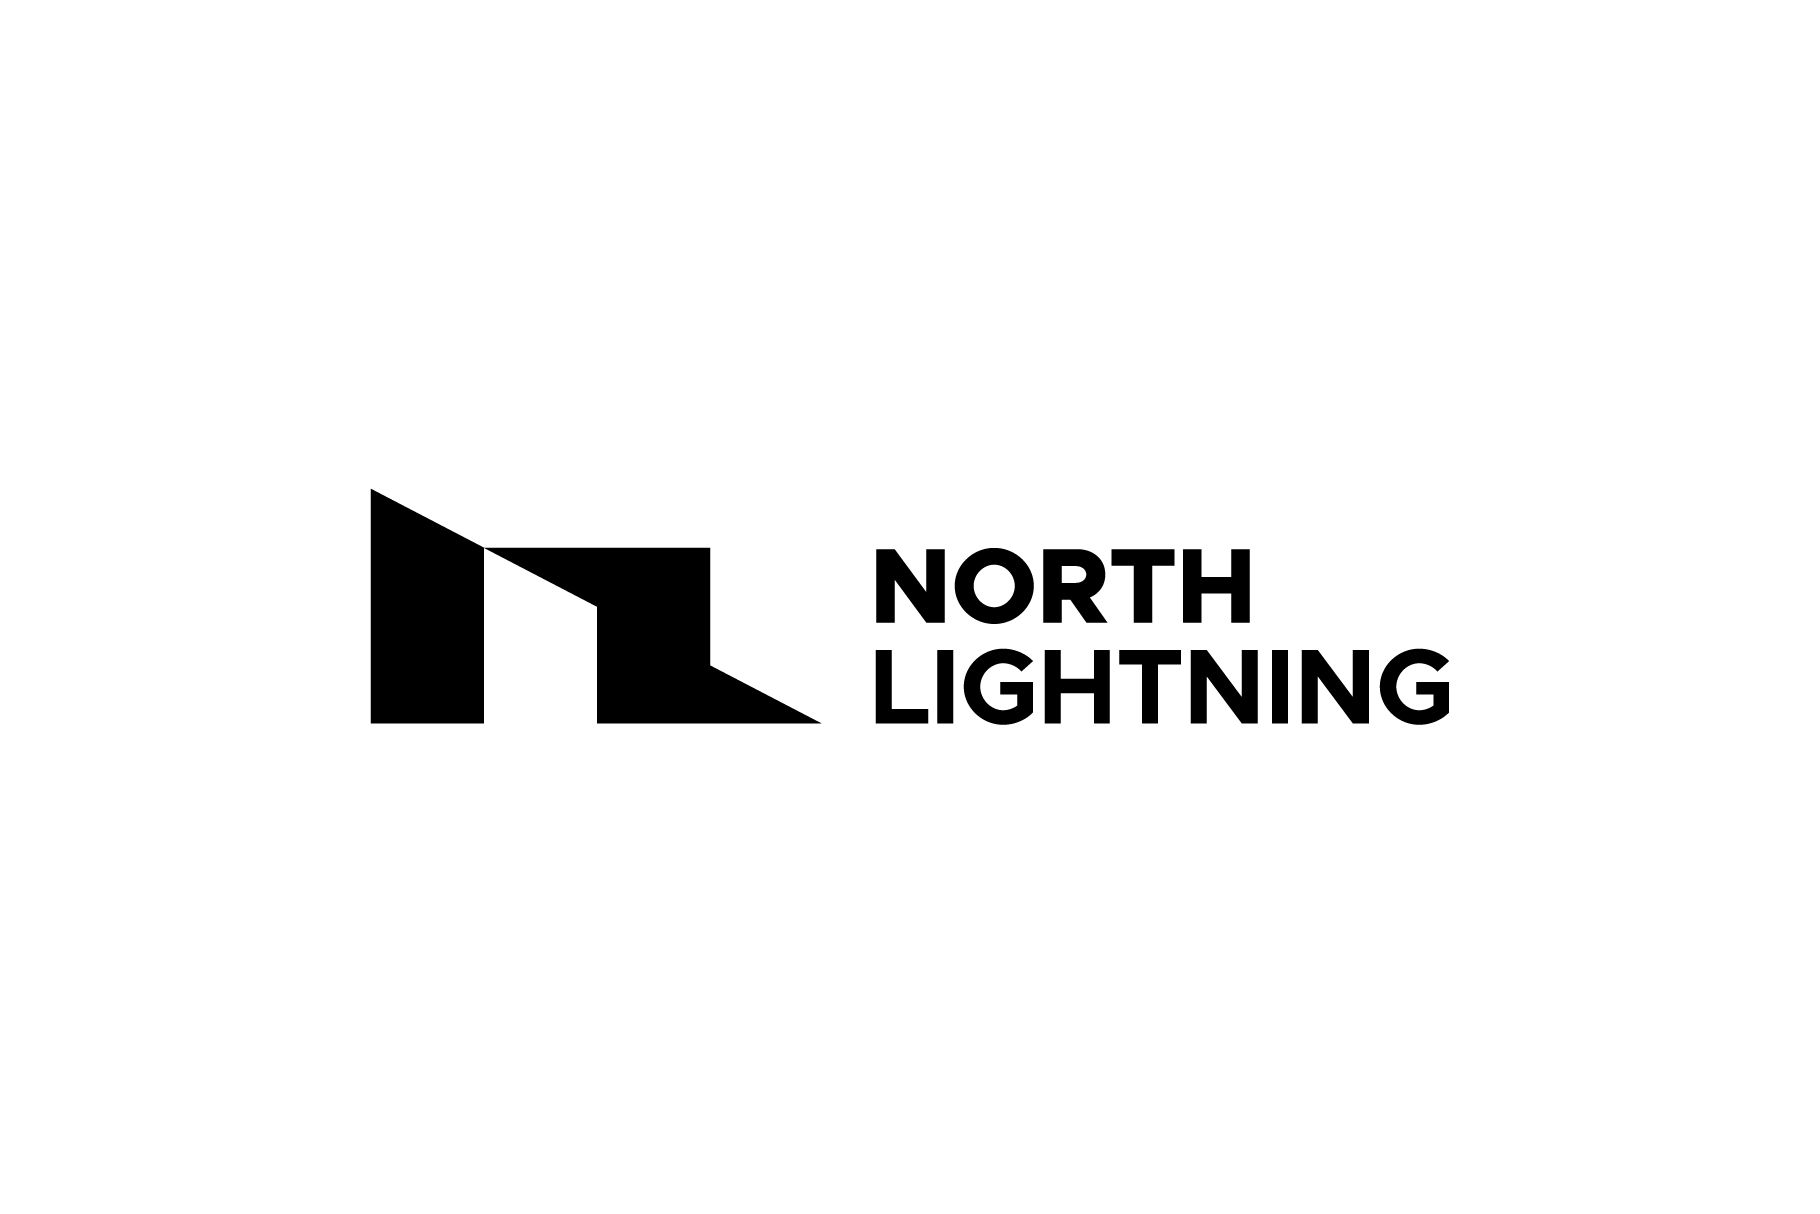 N Letter Lightning Bolt Logo Design Template by Amadul11 | Codester